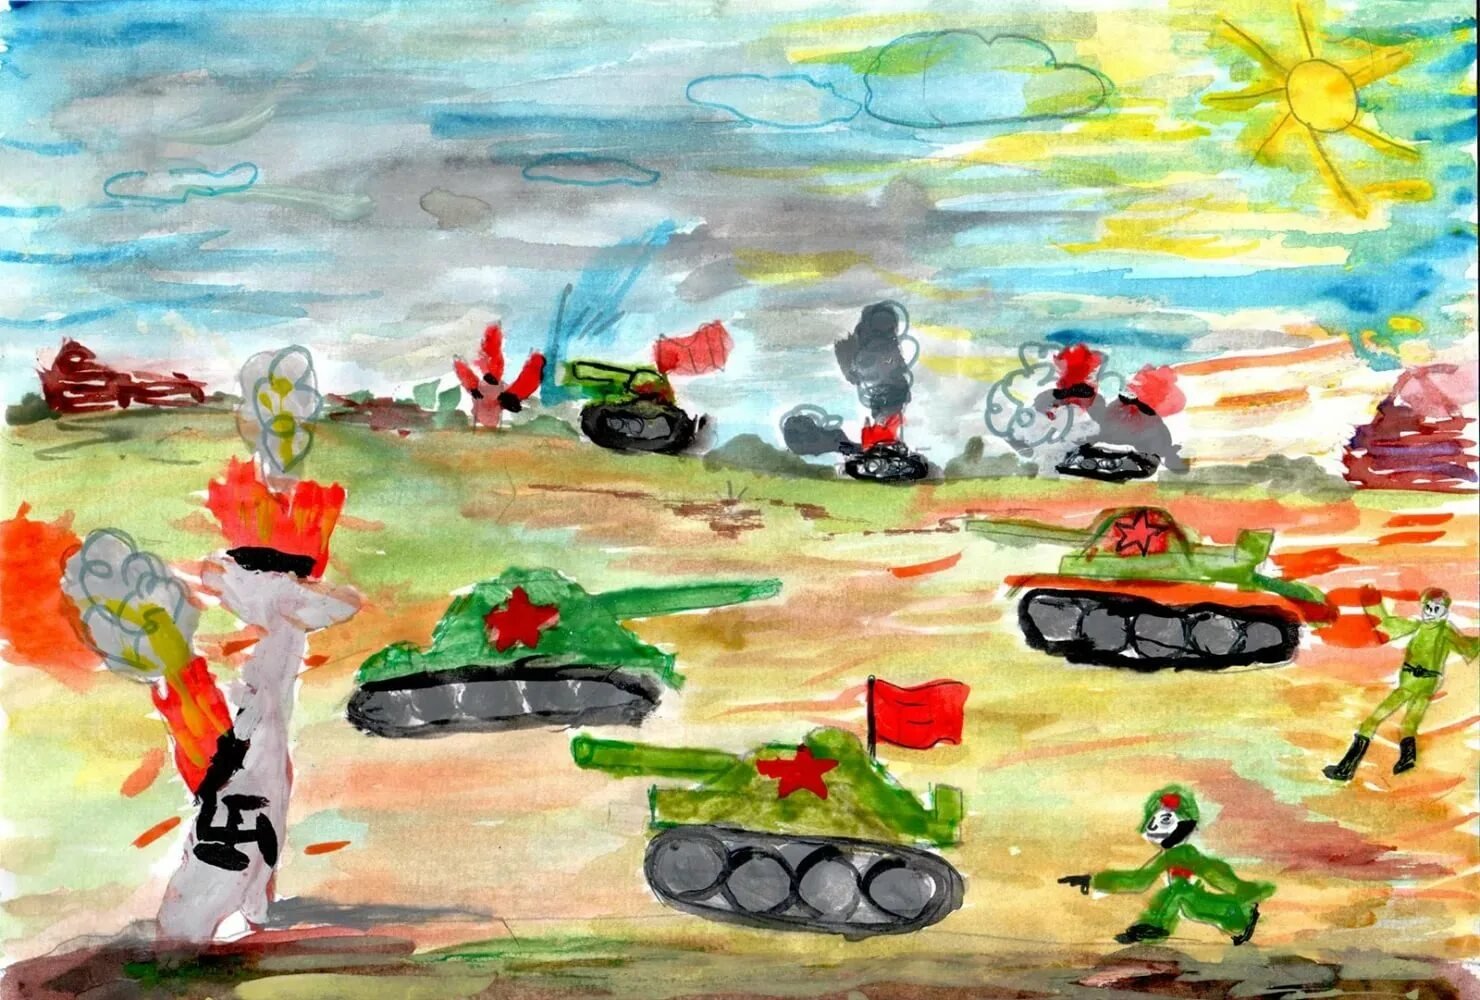 Конкурс рисунков о войне